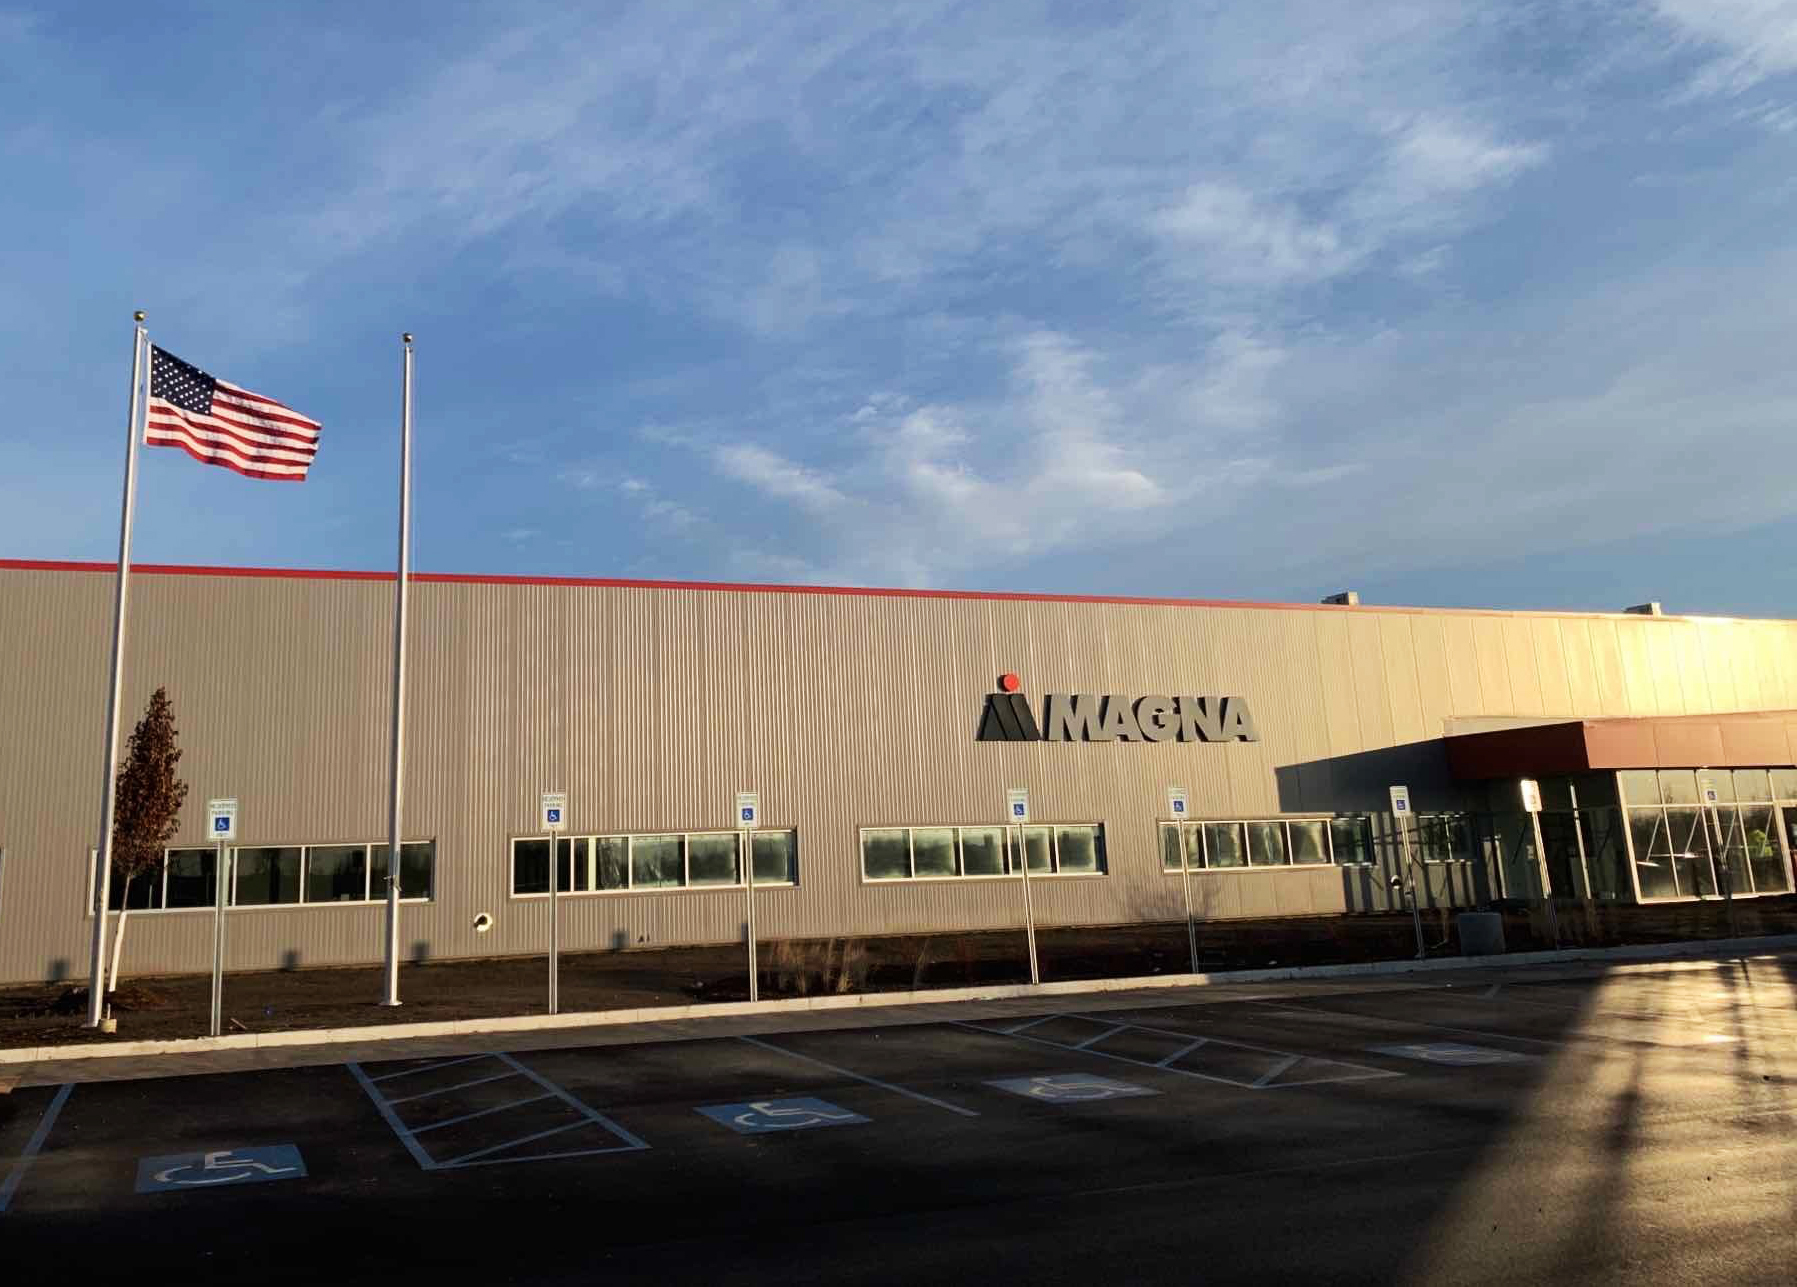 70M Magna Auto Manufacturing Facility Opens in St. Clair, MI William